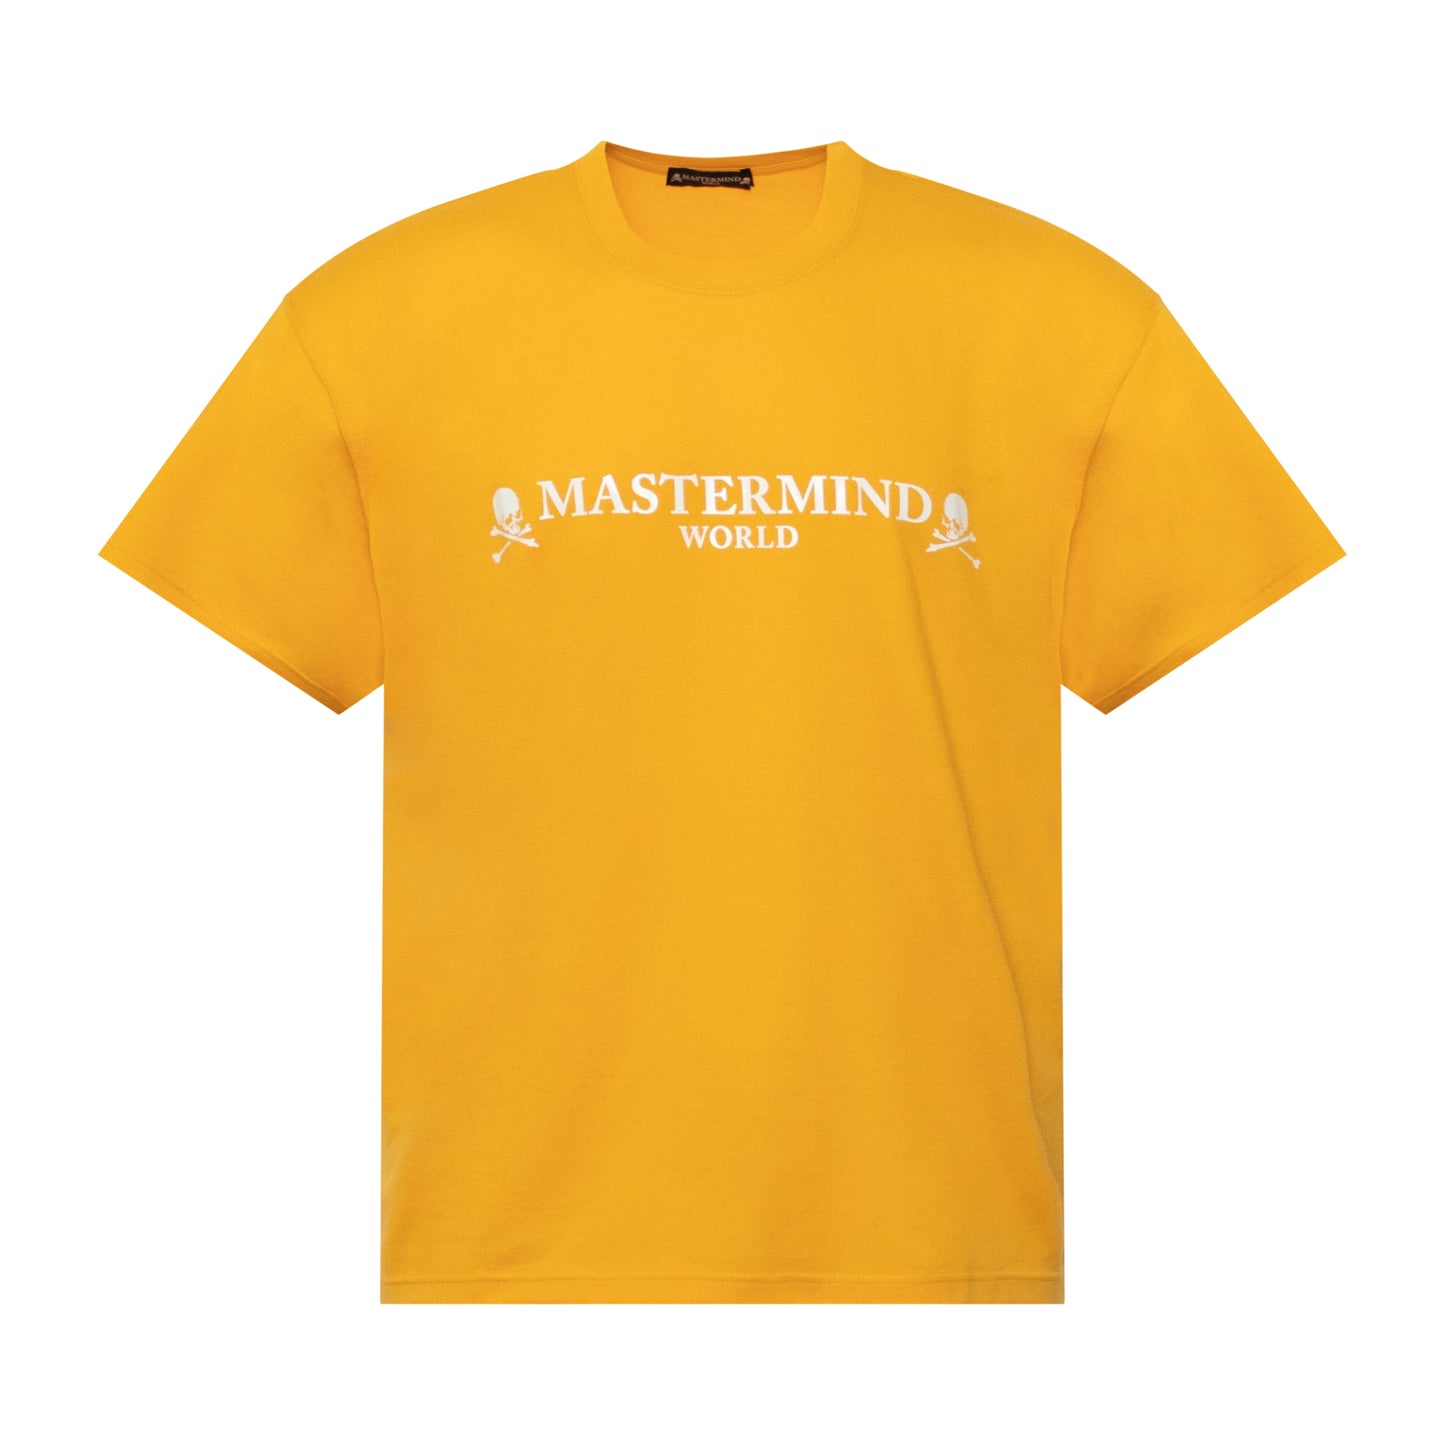 Mastermind World T-Shirt in Yellow